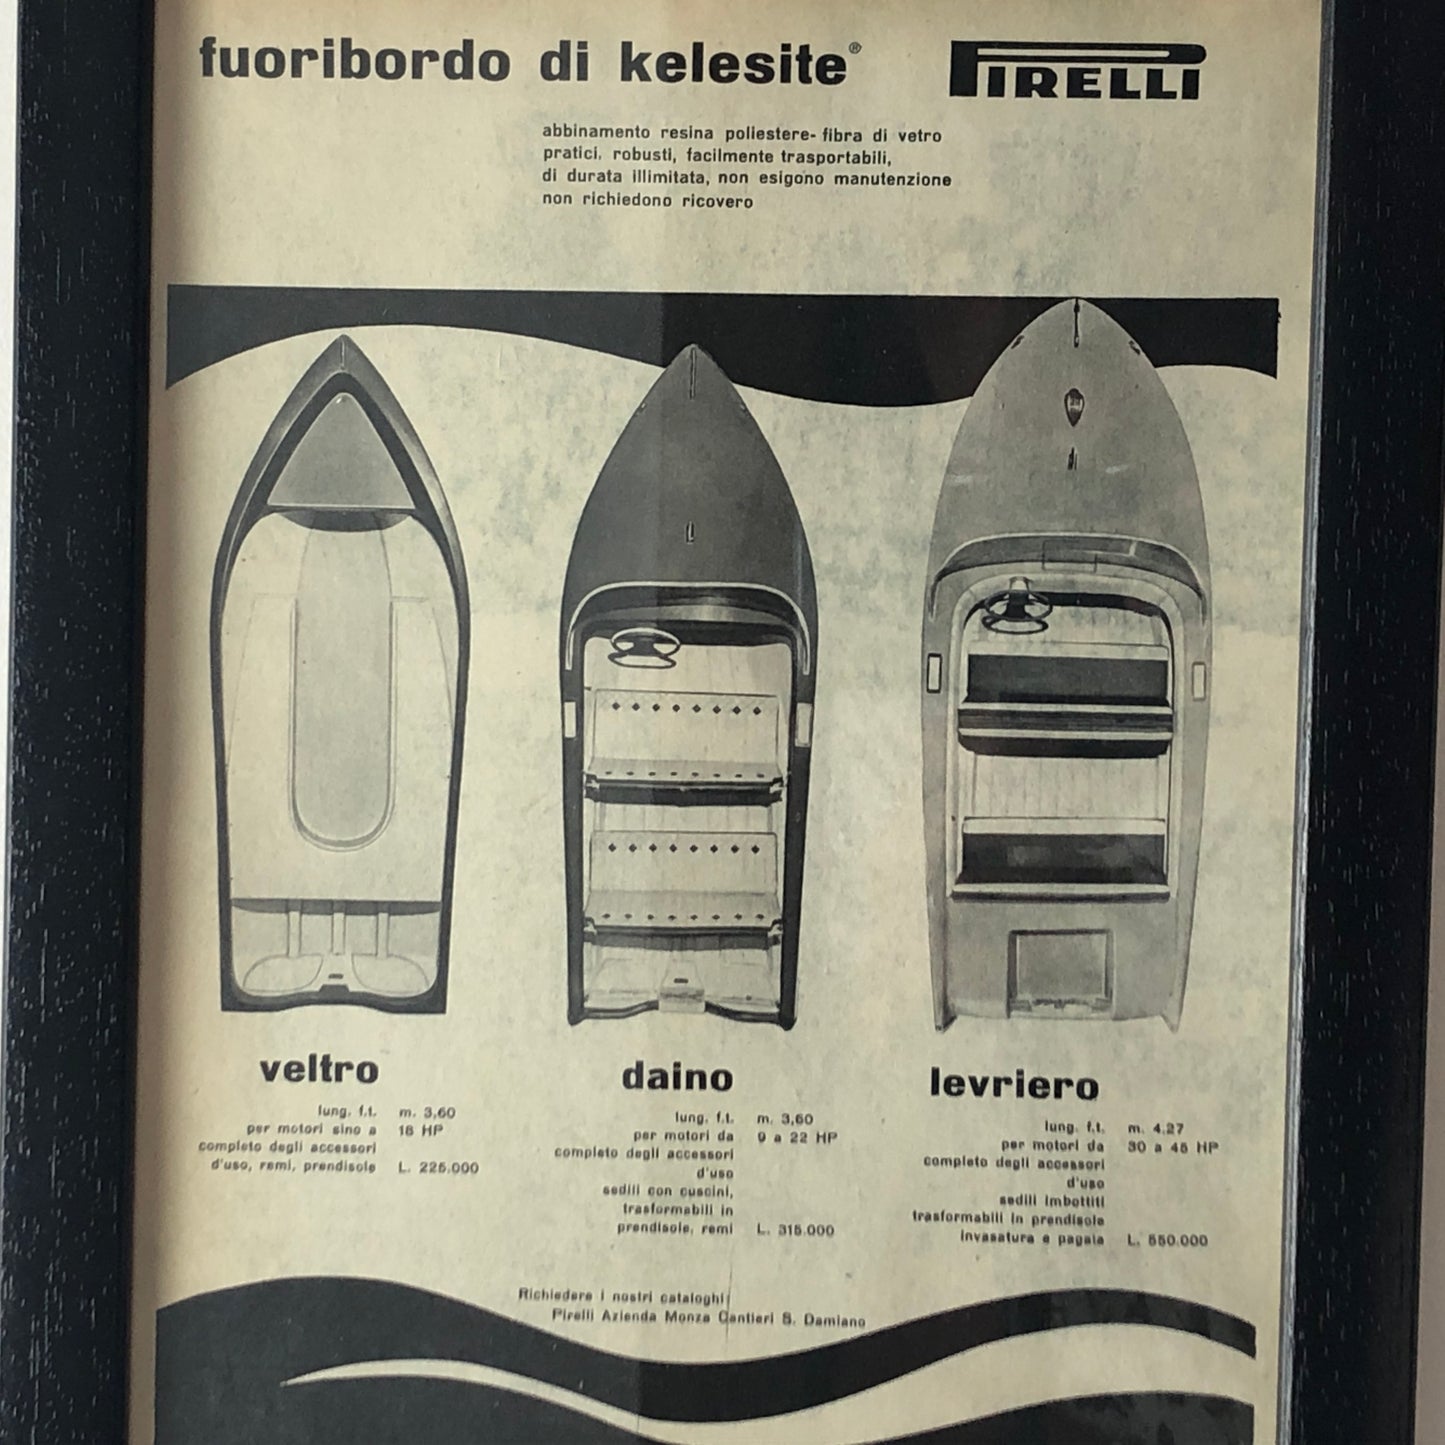 Pirelli, Advertising Year 1960 Pirelli Outboard Range by Kelesite with Price List